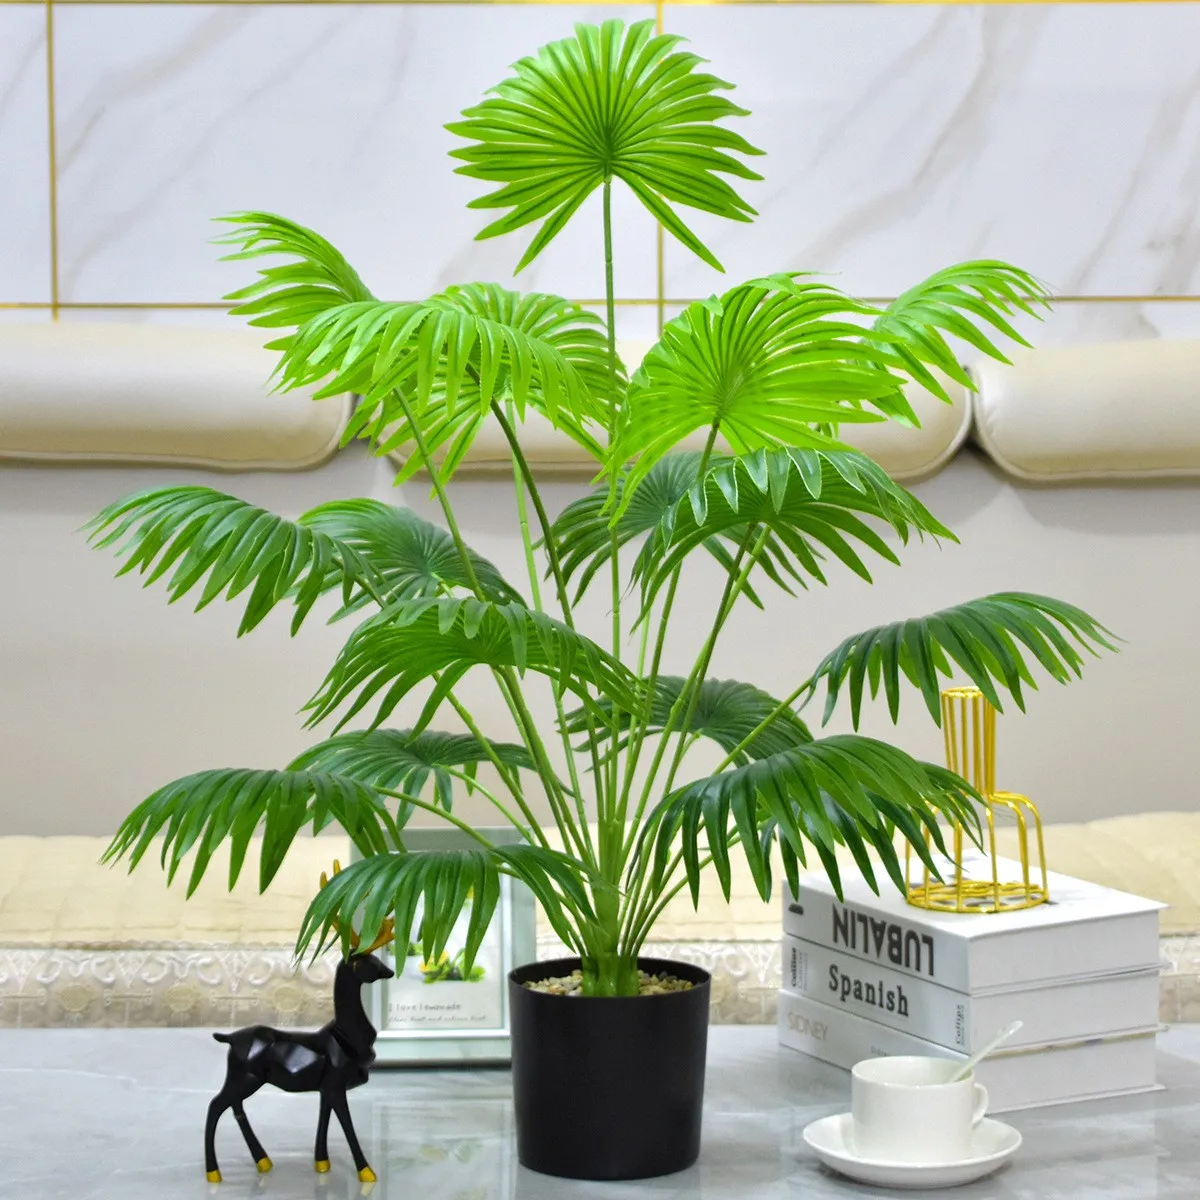 

60-75cm Large Artificial Plants Fan Palm Tree Fake Tropical Monstera Plastic Leafs Big Palm Foliage Branch For Home Garden Decor